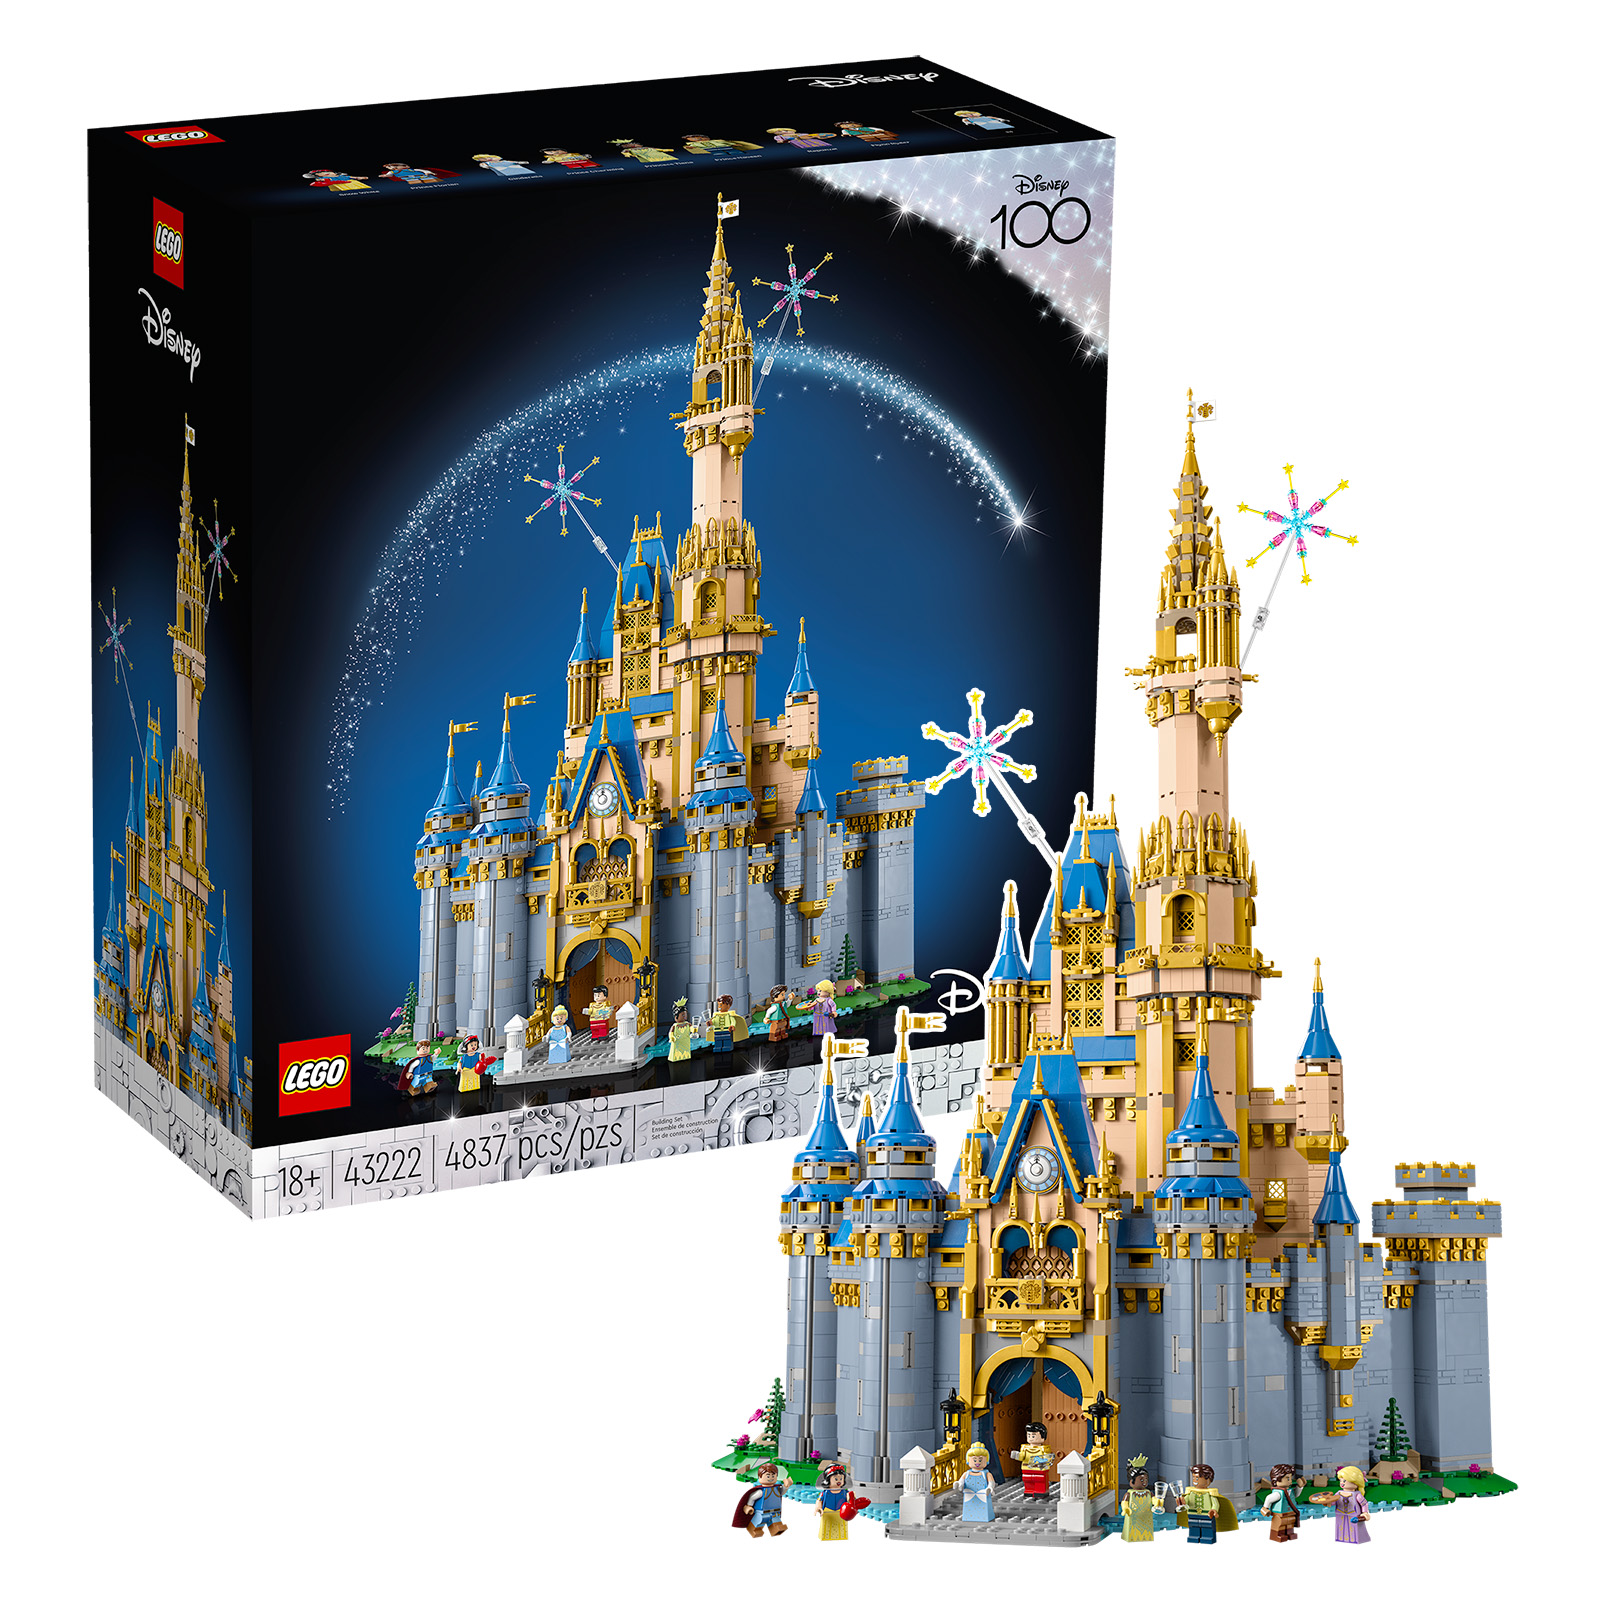 LEGO Disney 100th Celebration 43222 Disney Castle the set is online on